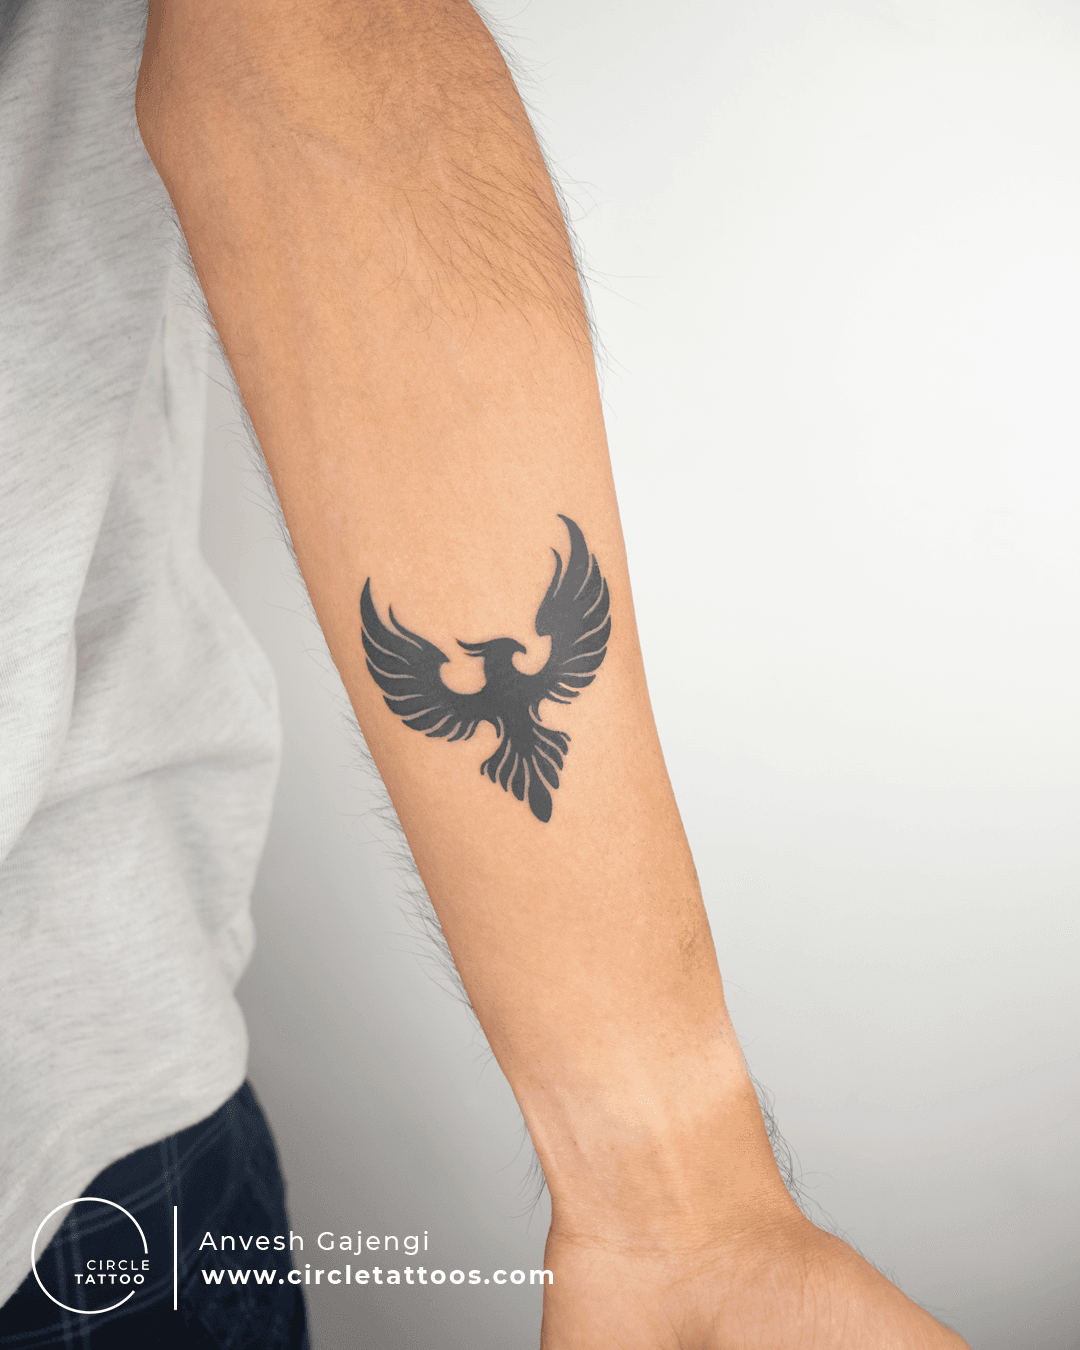 90 Circle Tattoo Designs For Men  Circular Ink Ideas